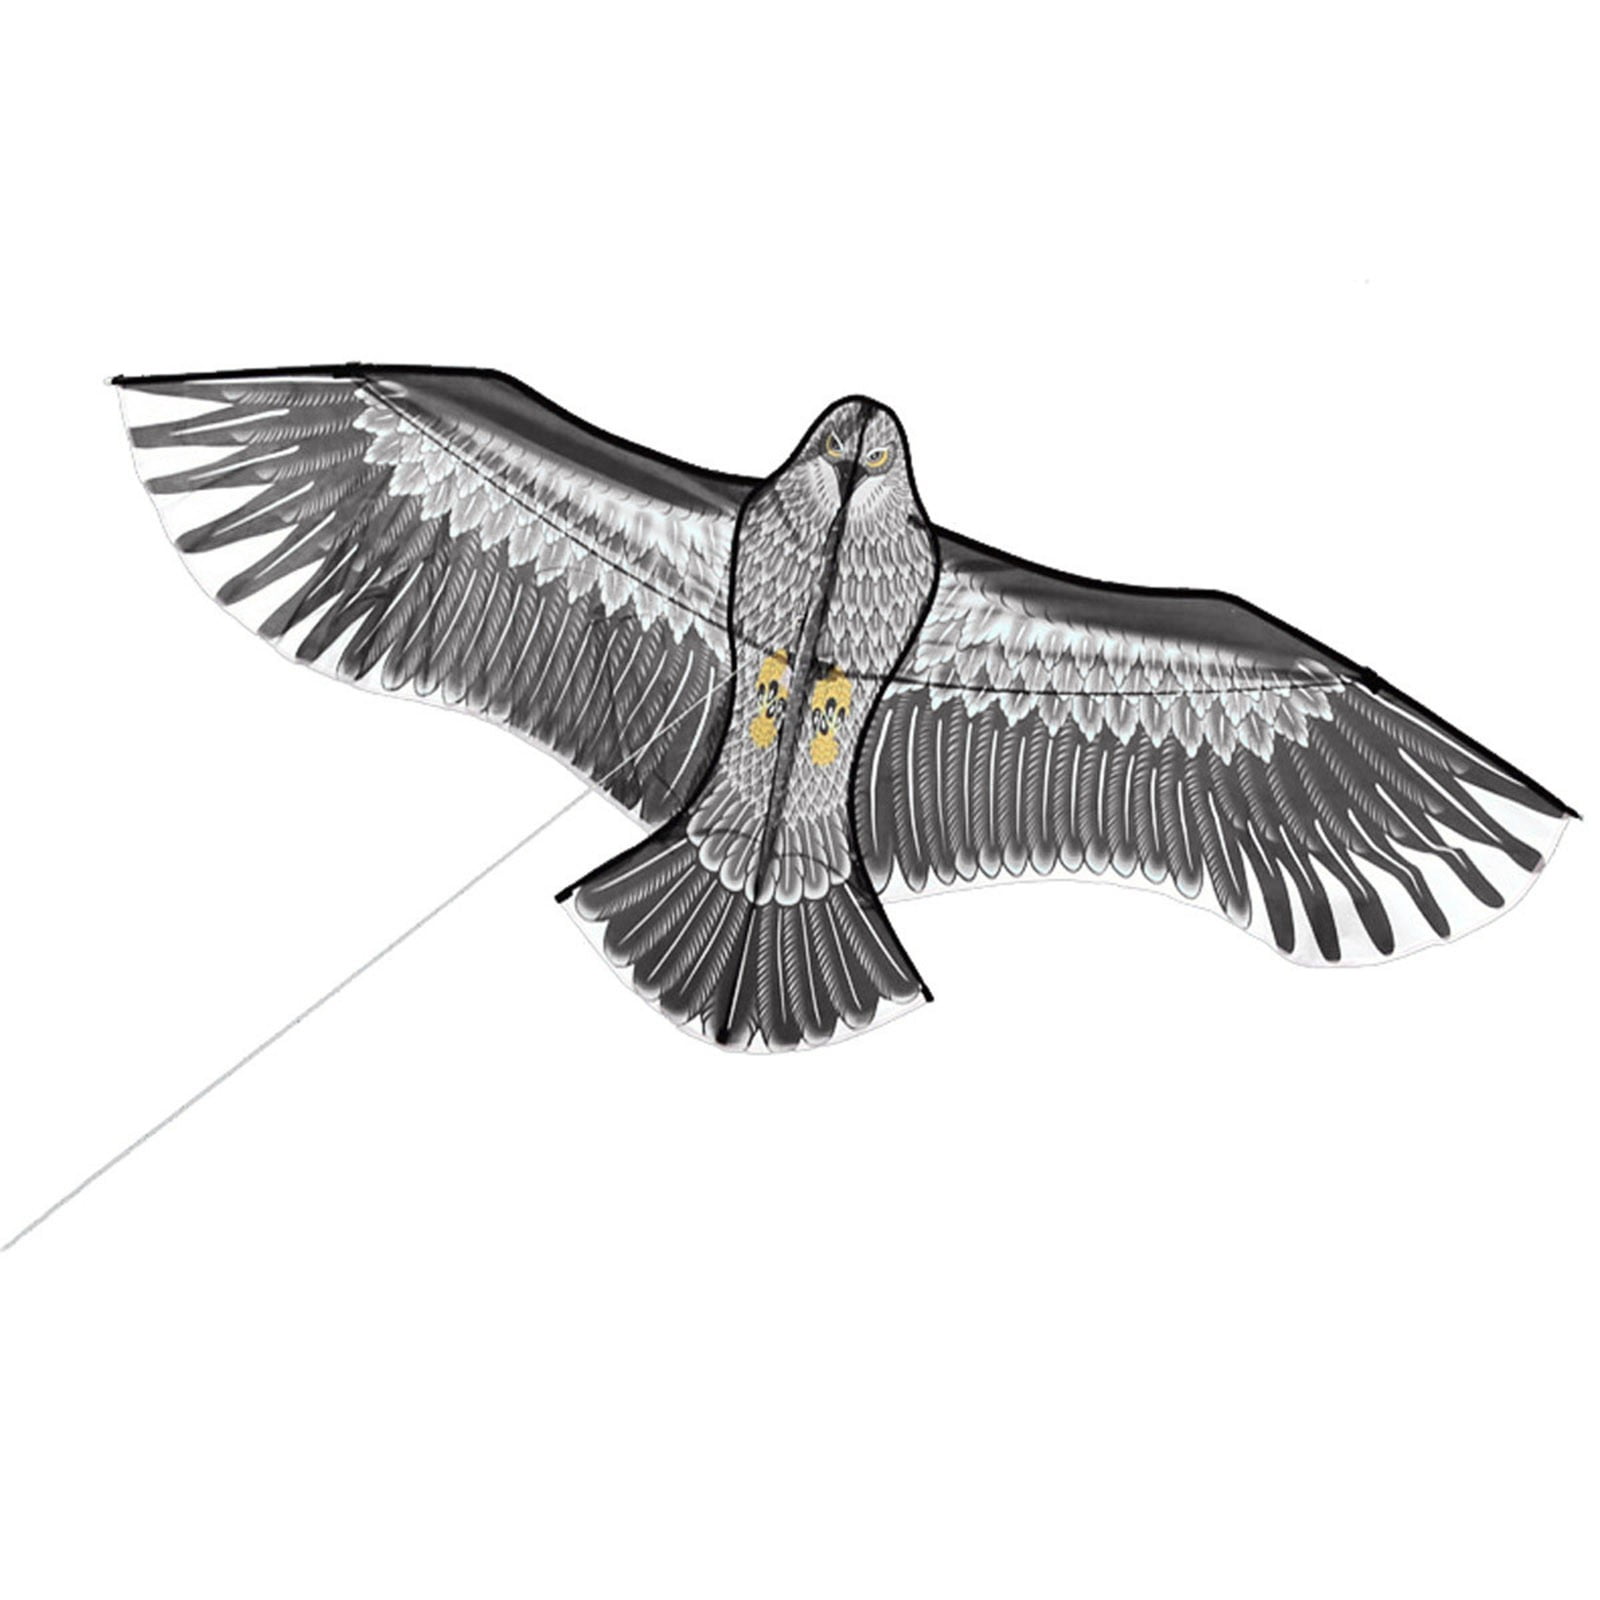 Hengda Kite-Strong Eagles!Huge beginner eagle kites for Kids and Adults.74-Inch 